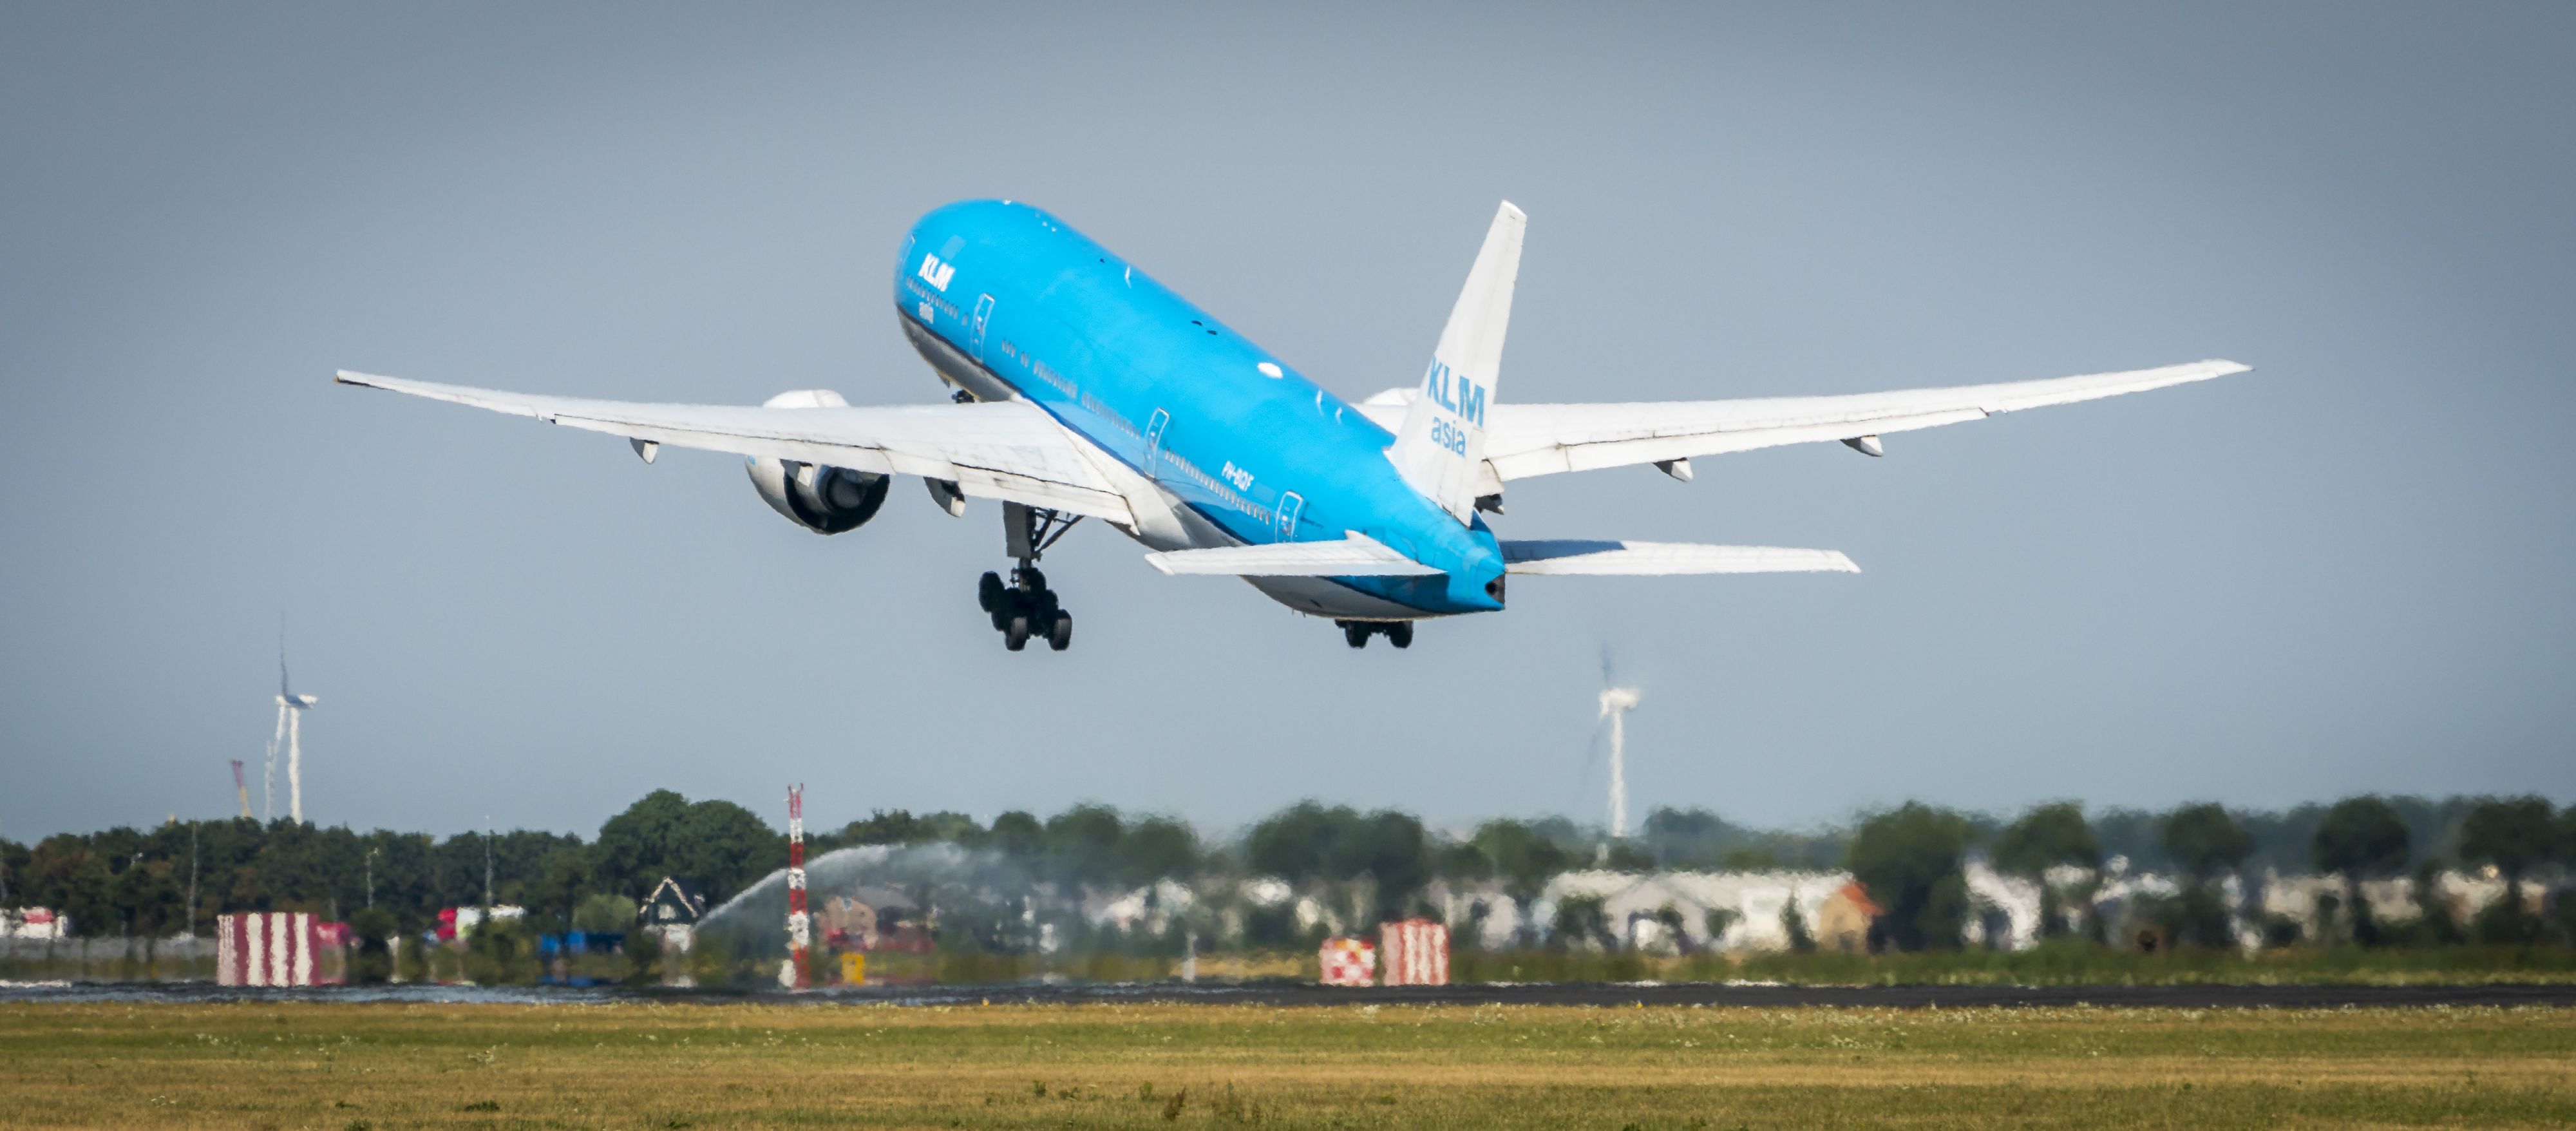 KLM schrapt tien vluchten vanwege staking